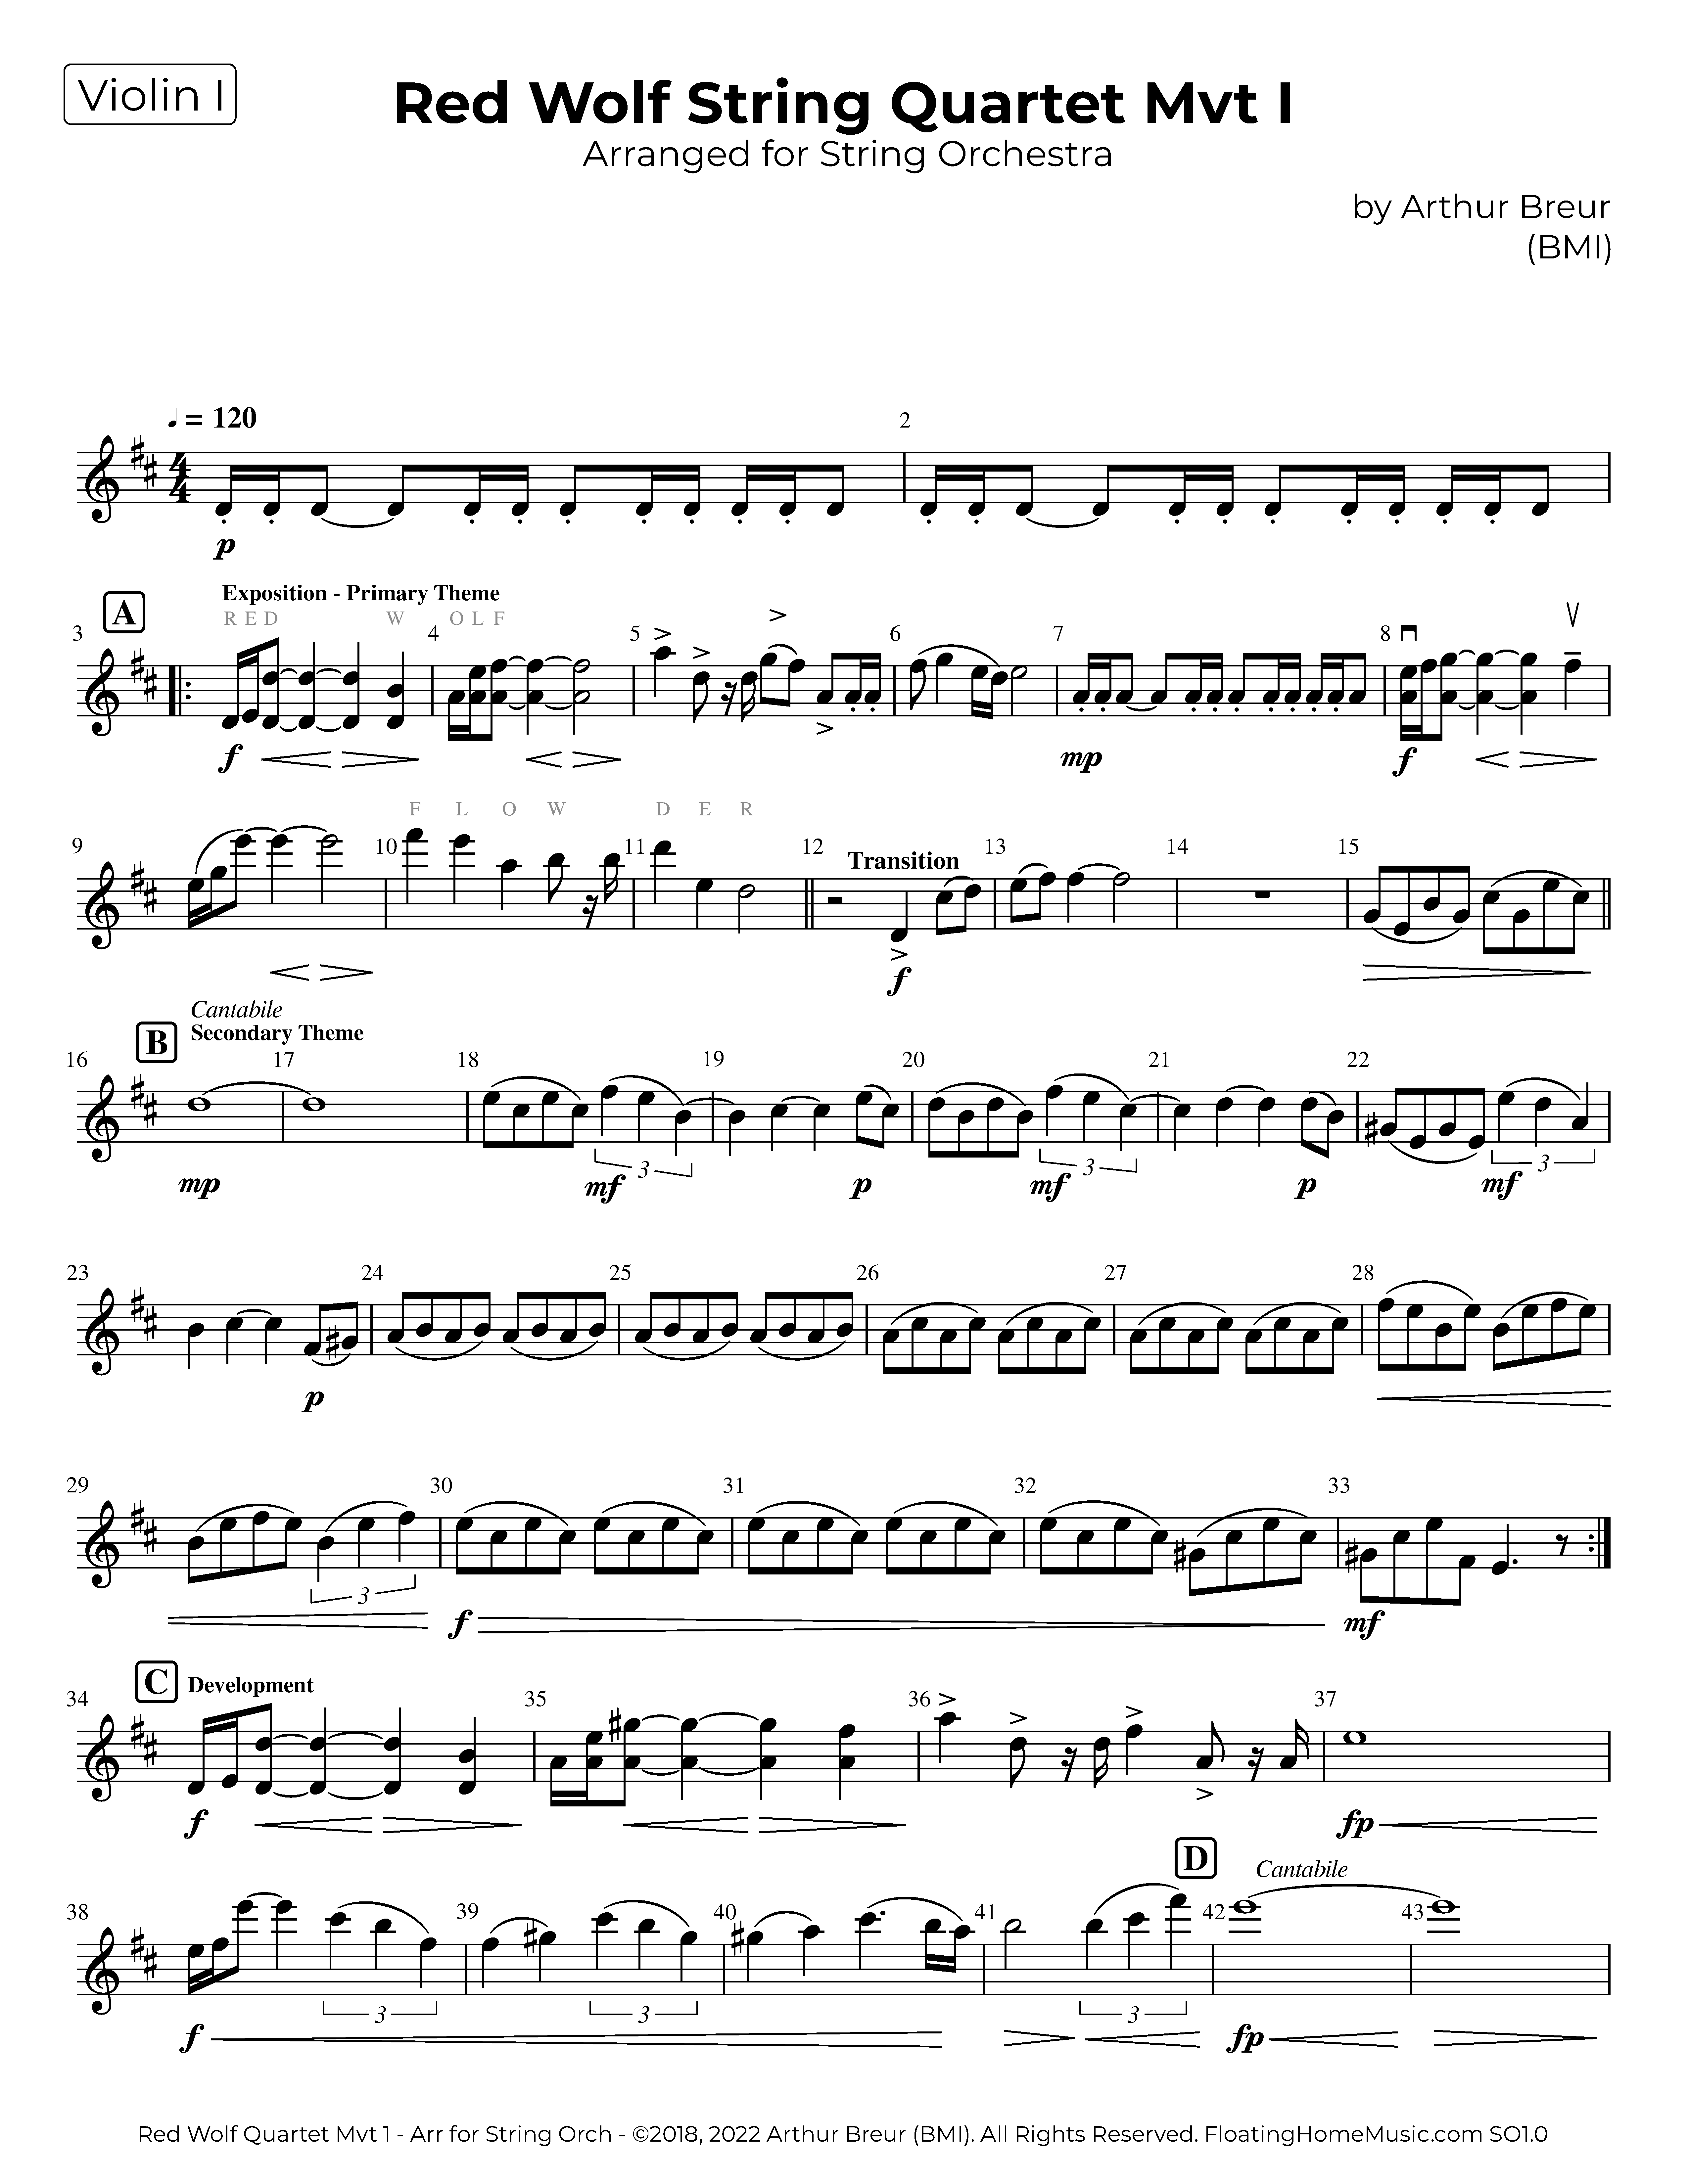 Red Wolf String Quartete Mvt 1 arr. for String Orchestra, Violin 1 part